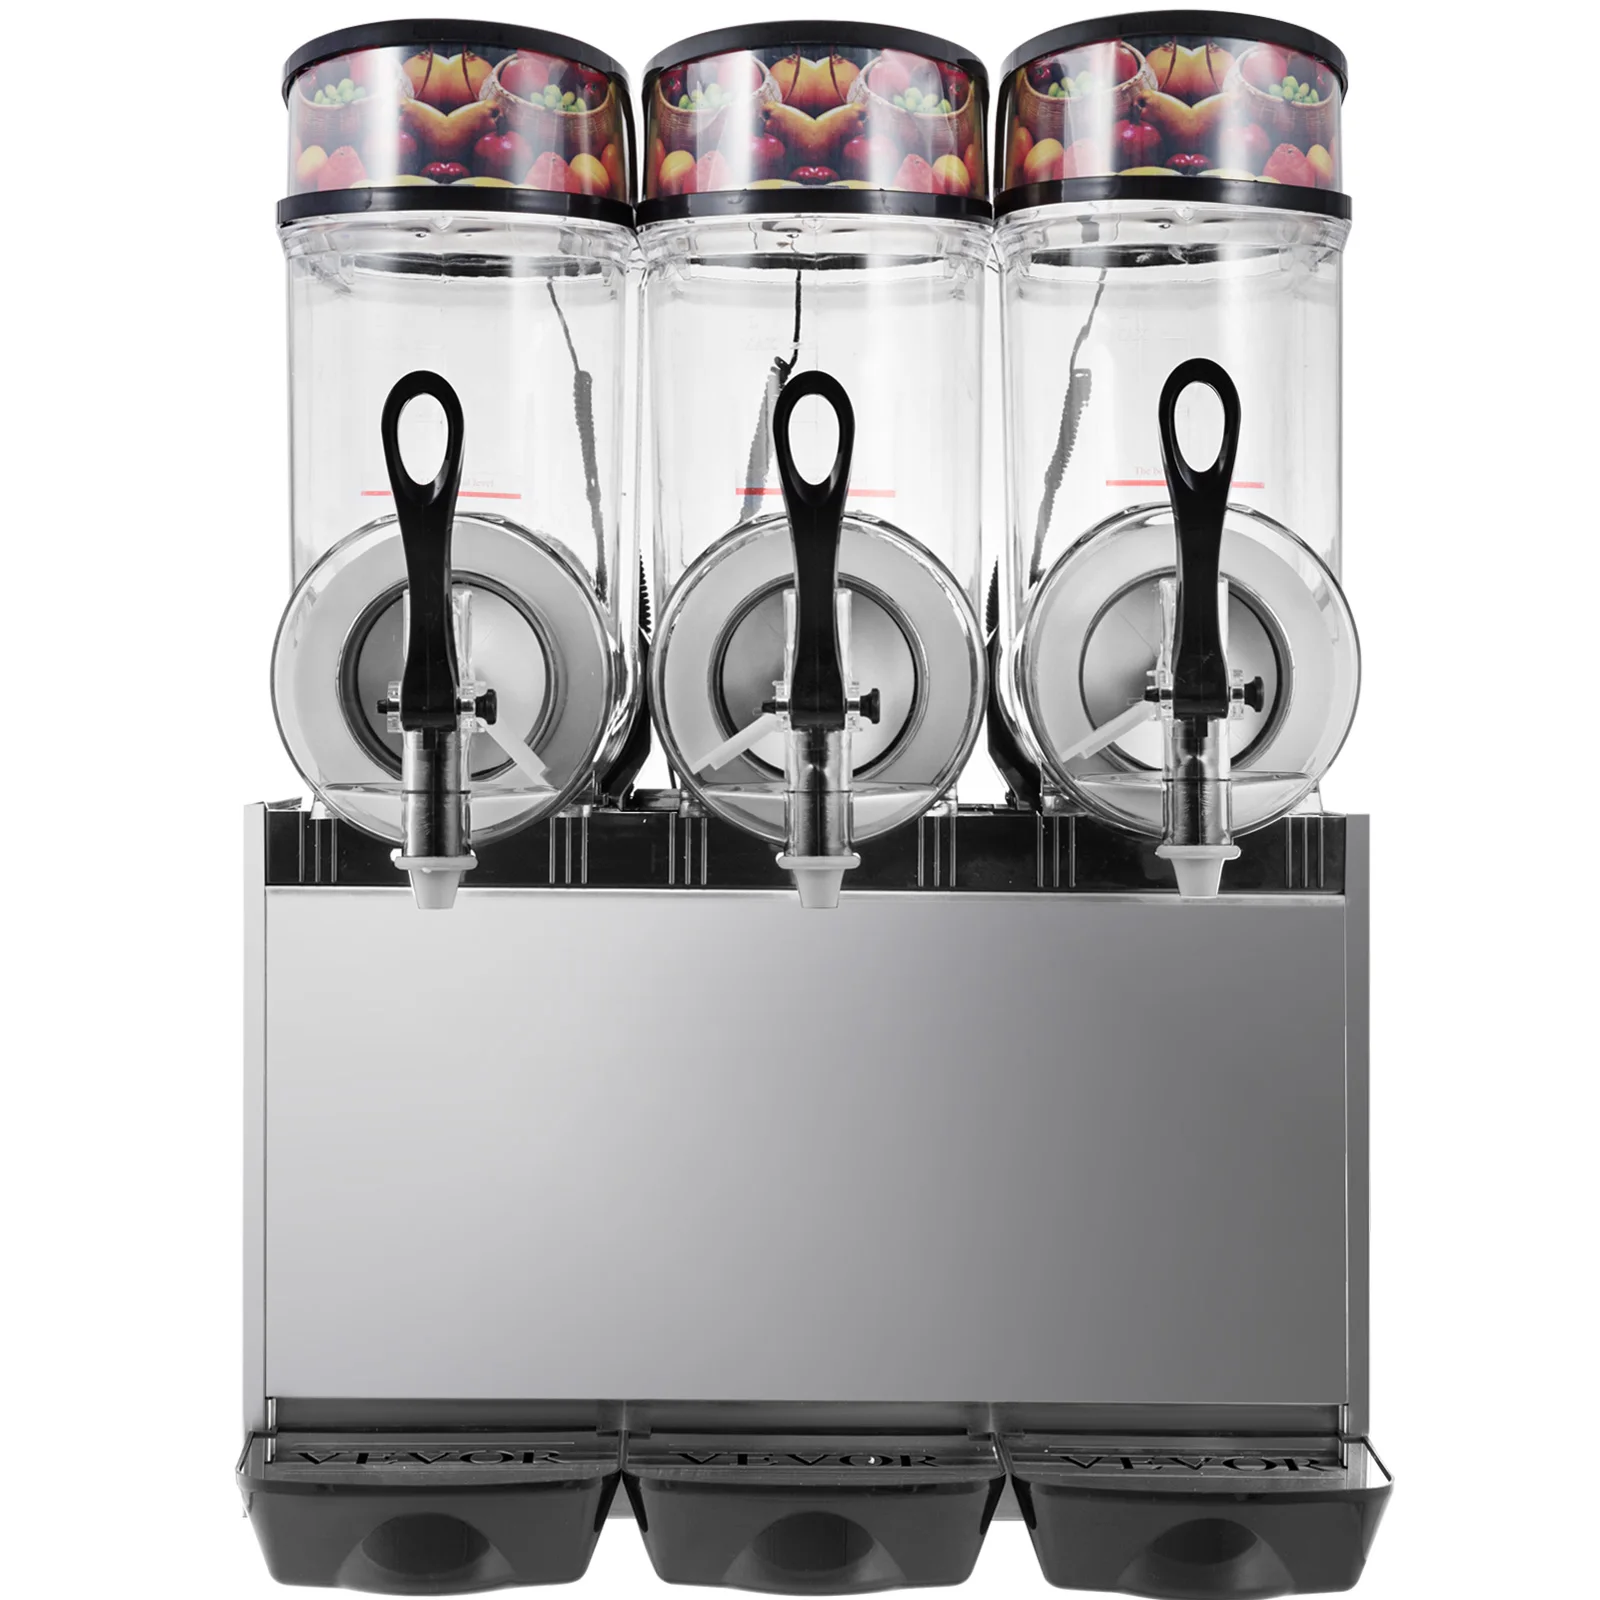 12L*3 Triple-Bowl Full Size Slush Frozen Drink Machine 900W Commercial Use